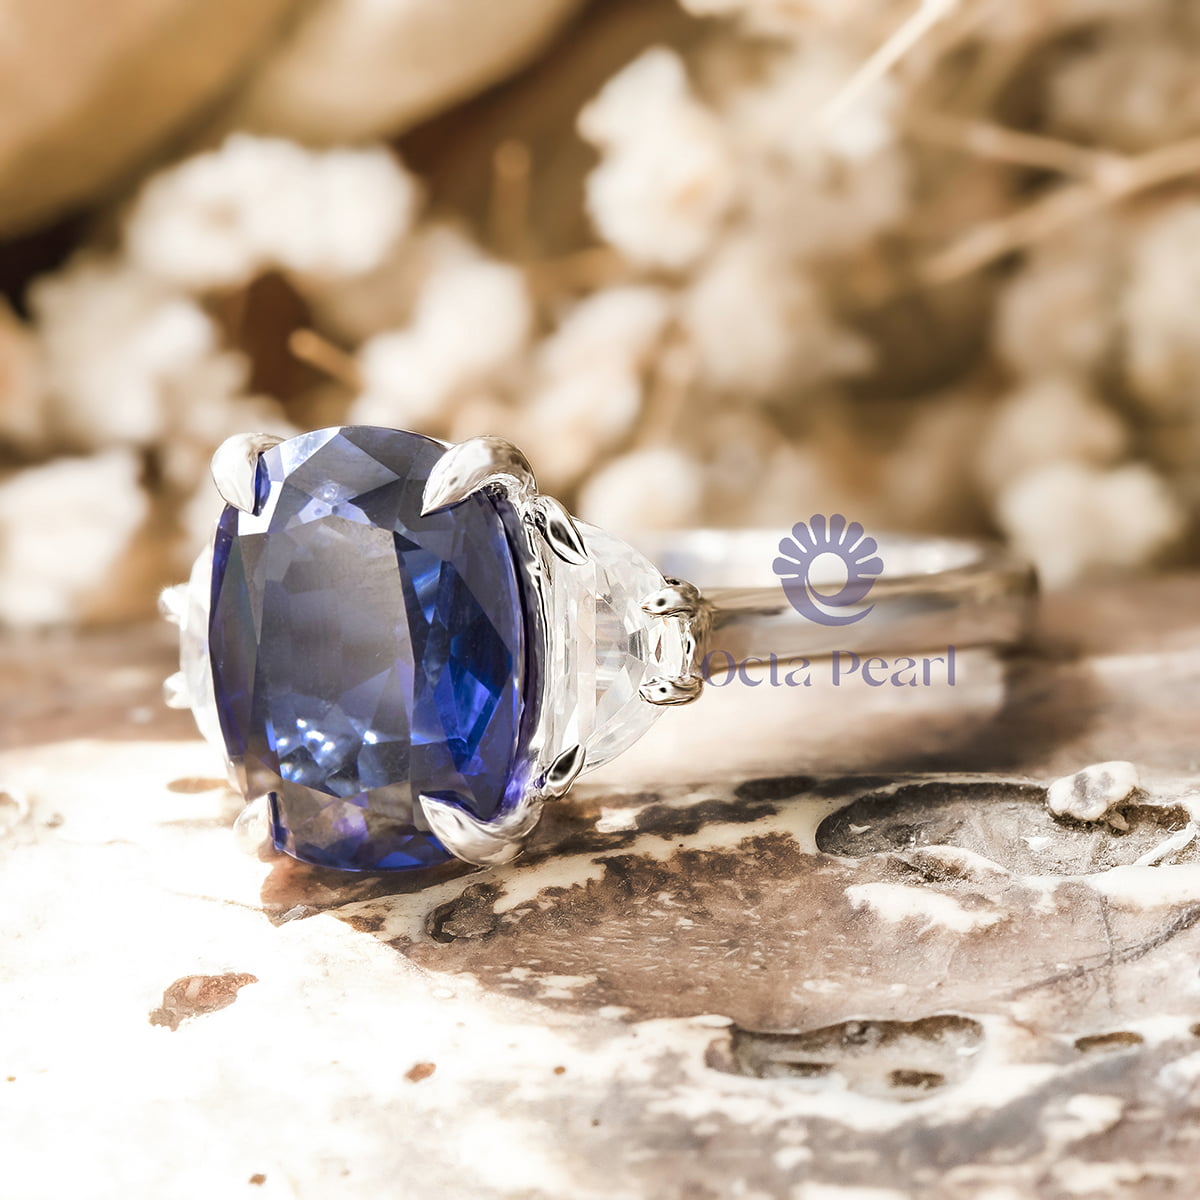 12x9 MM Blue Sapphire Cushion & Half Moon Cut Three Stone Handmade Ring For Women